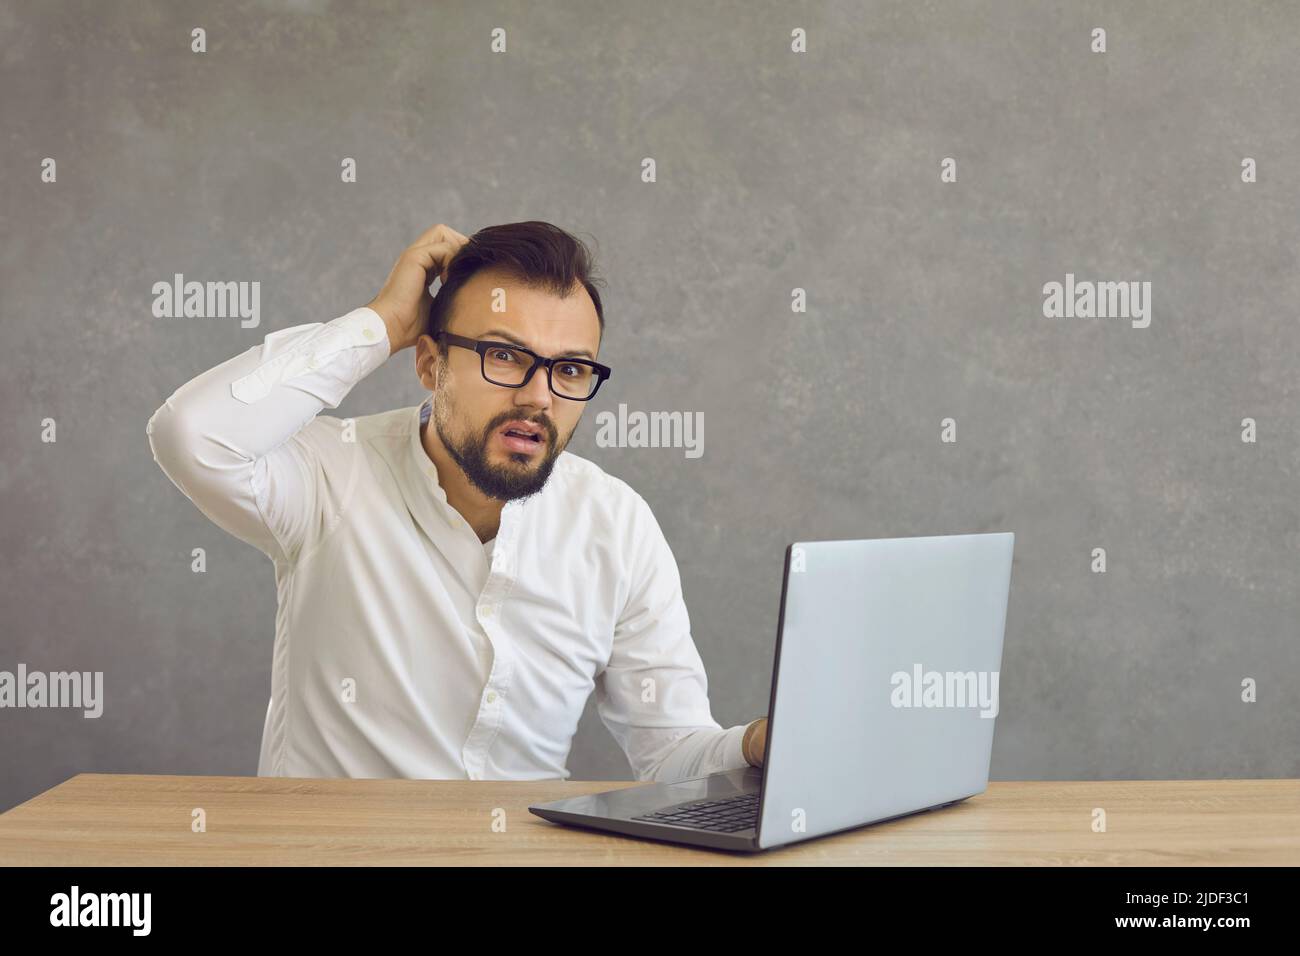 Worried stressed businessman shocked by bad news using laptop studio shot Stock Photo